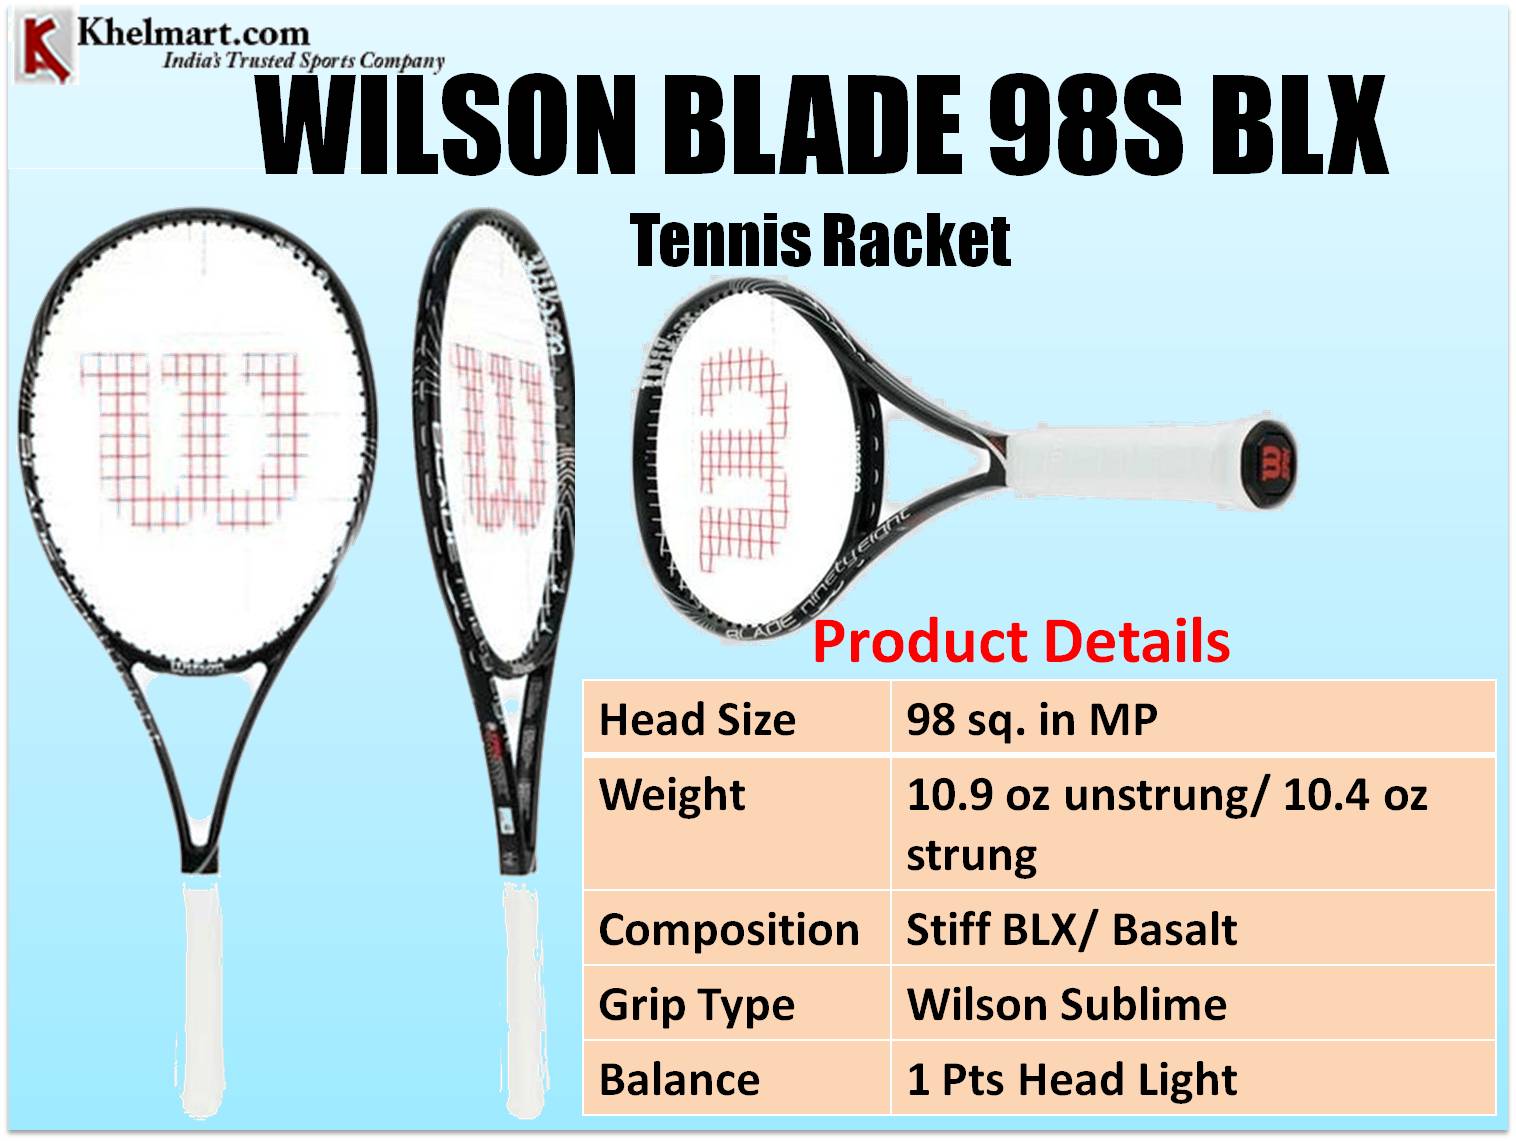 WILSON_BLADE_98S_BLX_Tennis_Racket.jpg